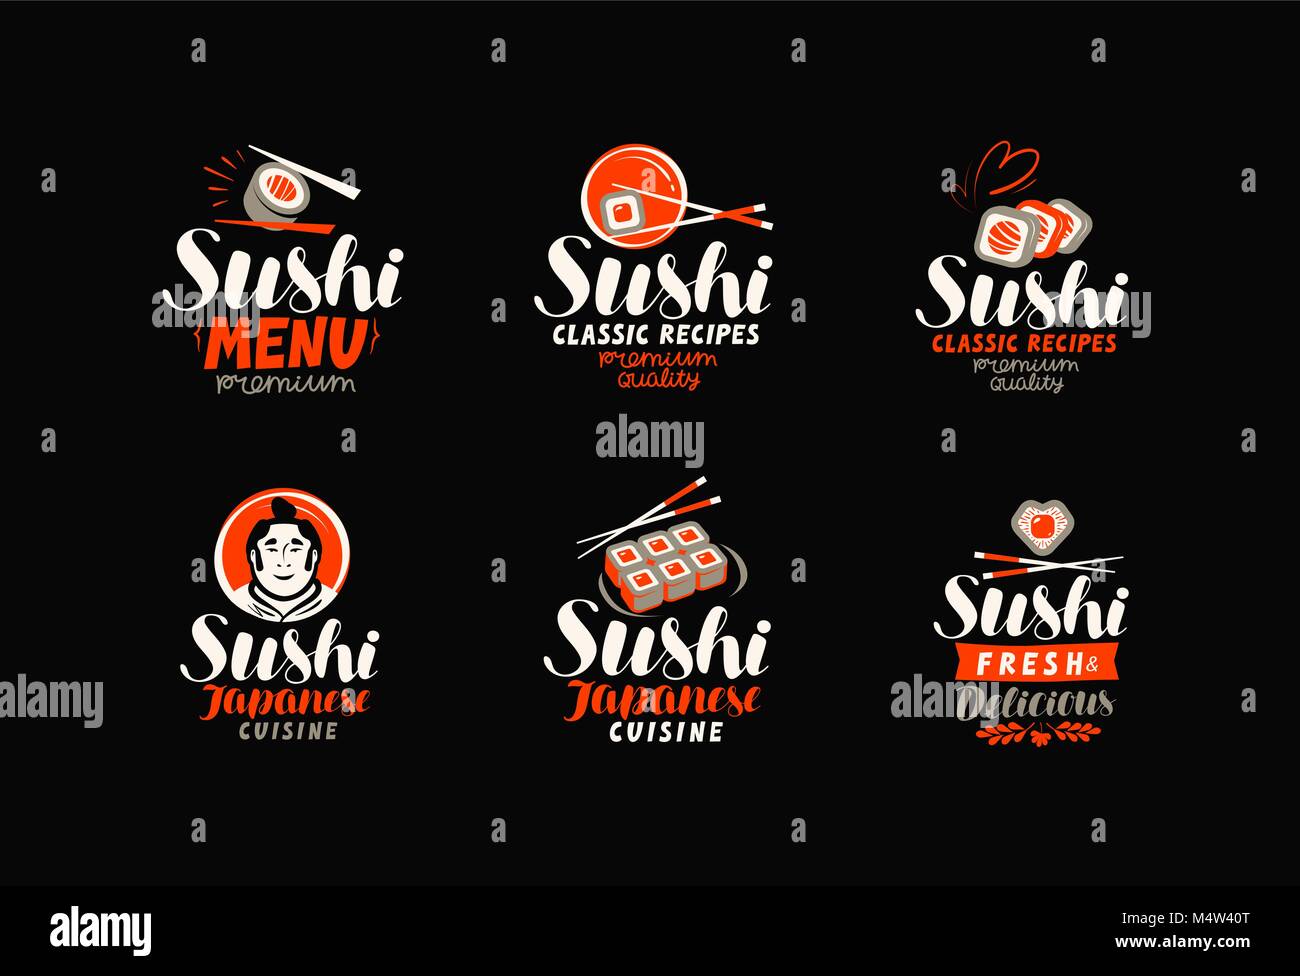 Sushi, sashimi, japanese cuisine logo or label. Set of elements for restaurant menu design. Vector illustration Stock Vector